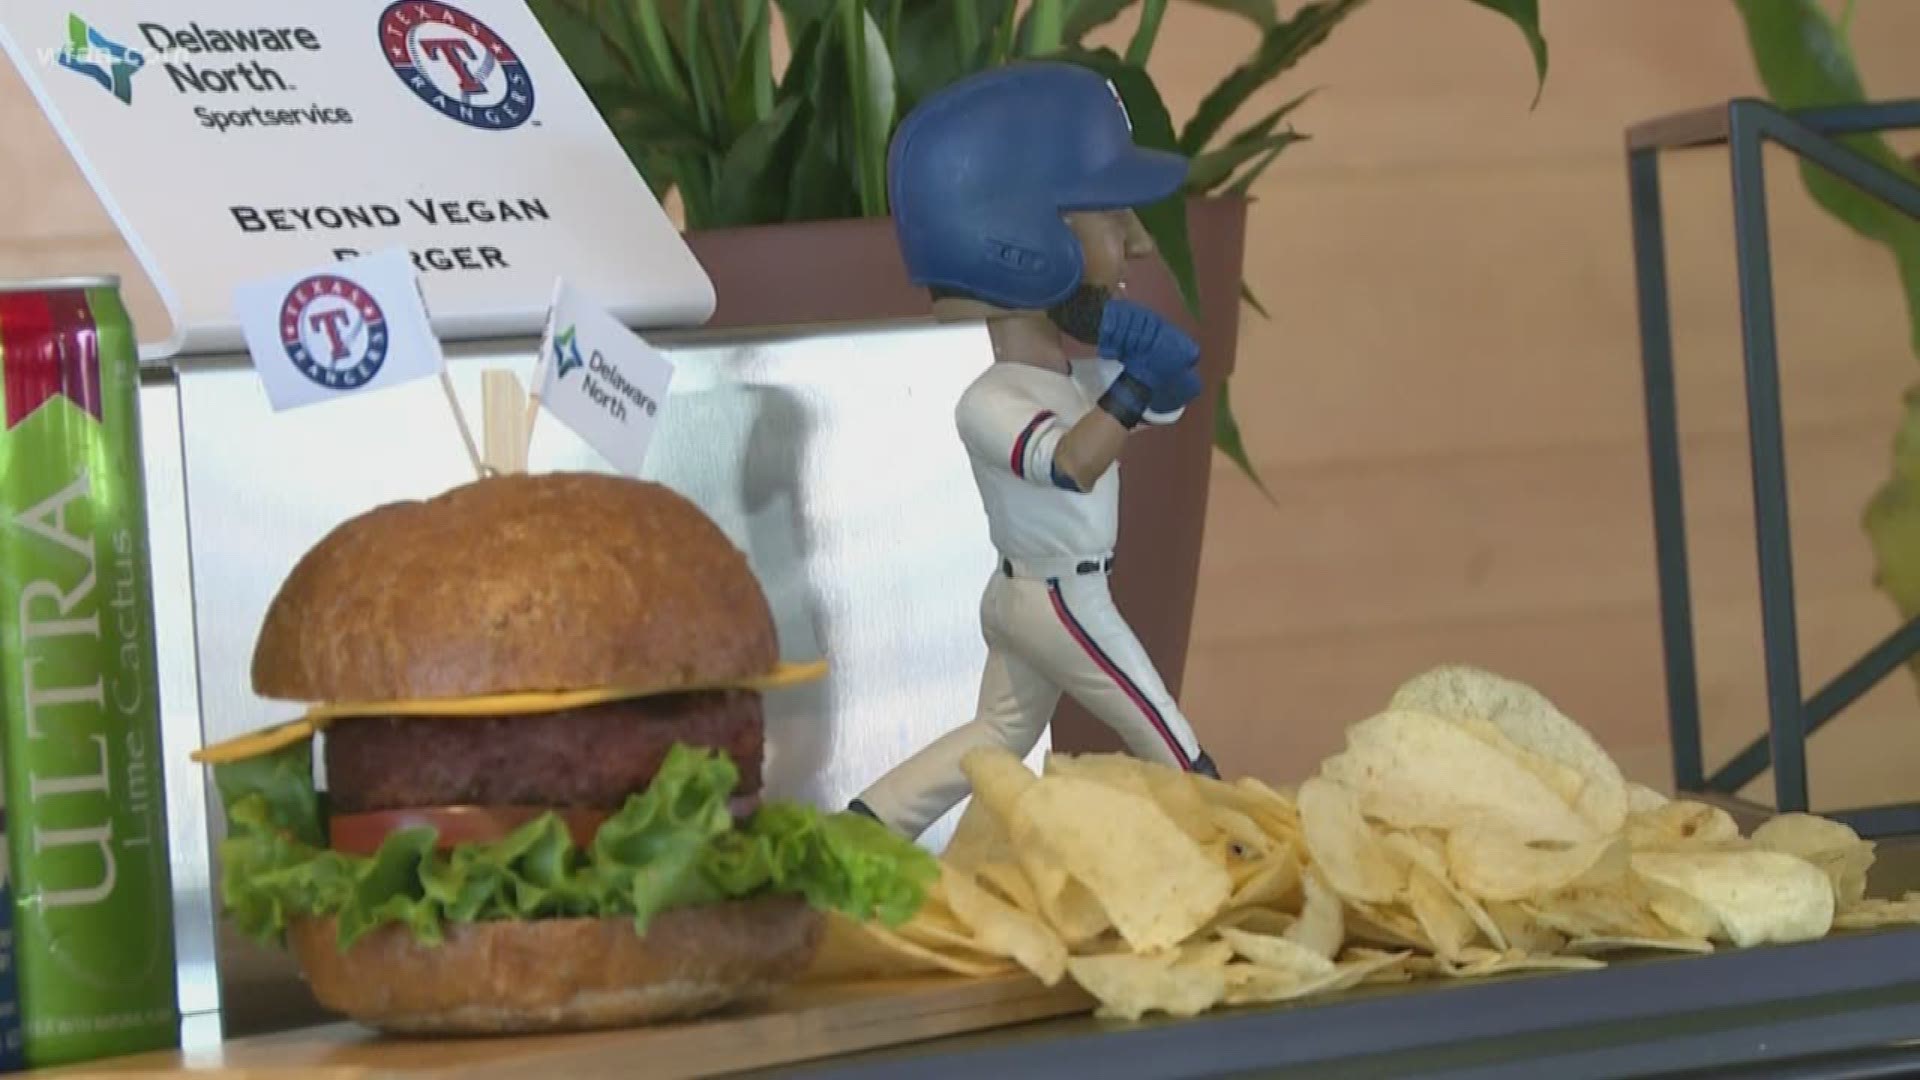 Texas Rangers New Food Menu Items 👀⚾️ 